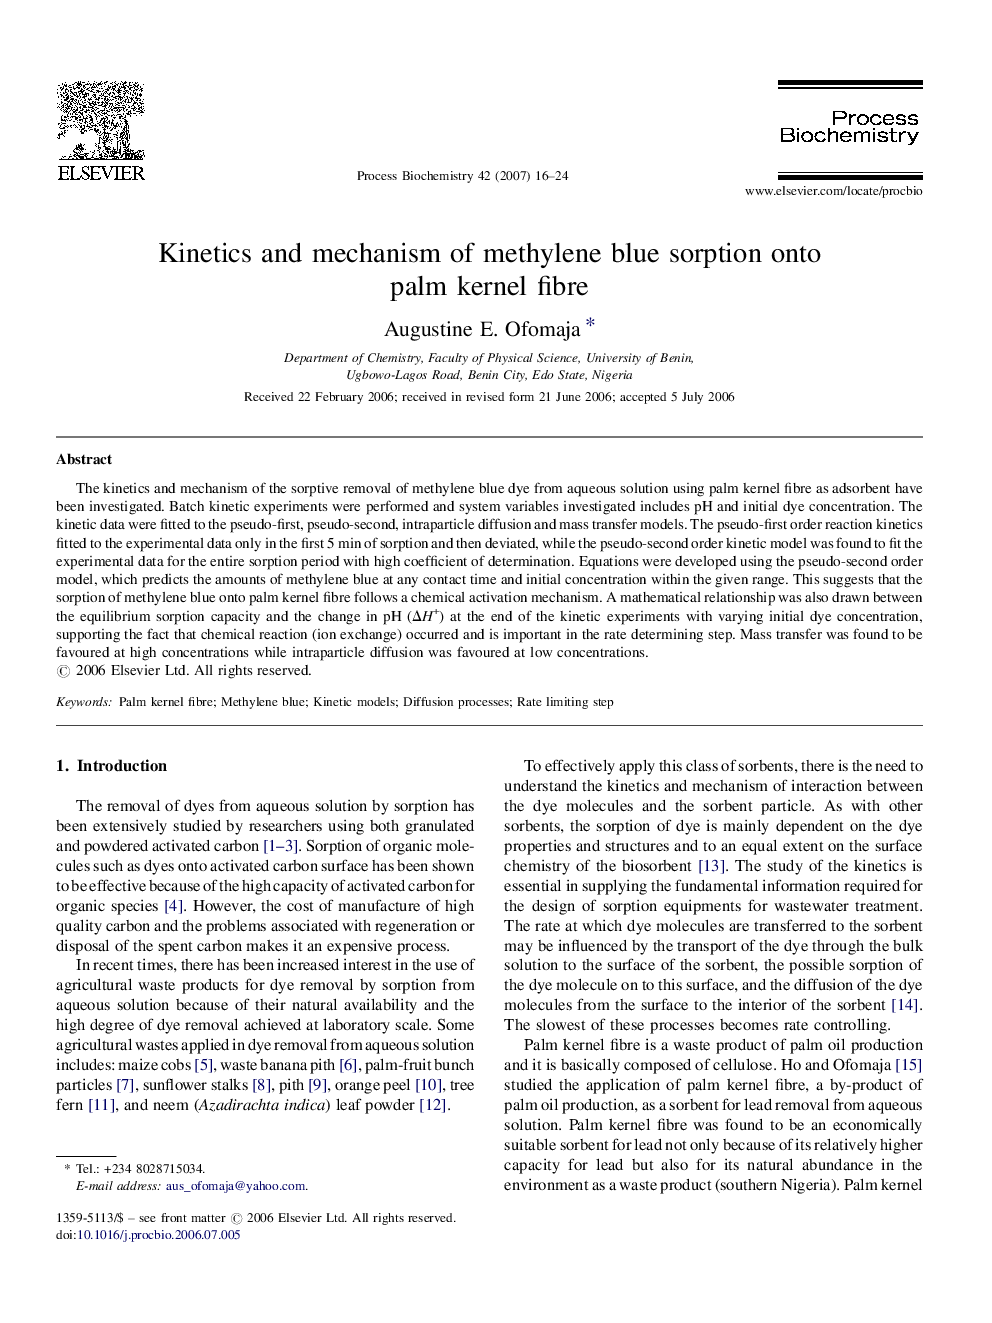 Kinetics and mechanism of methylene blue sorption onto palm kernel fibre